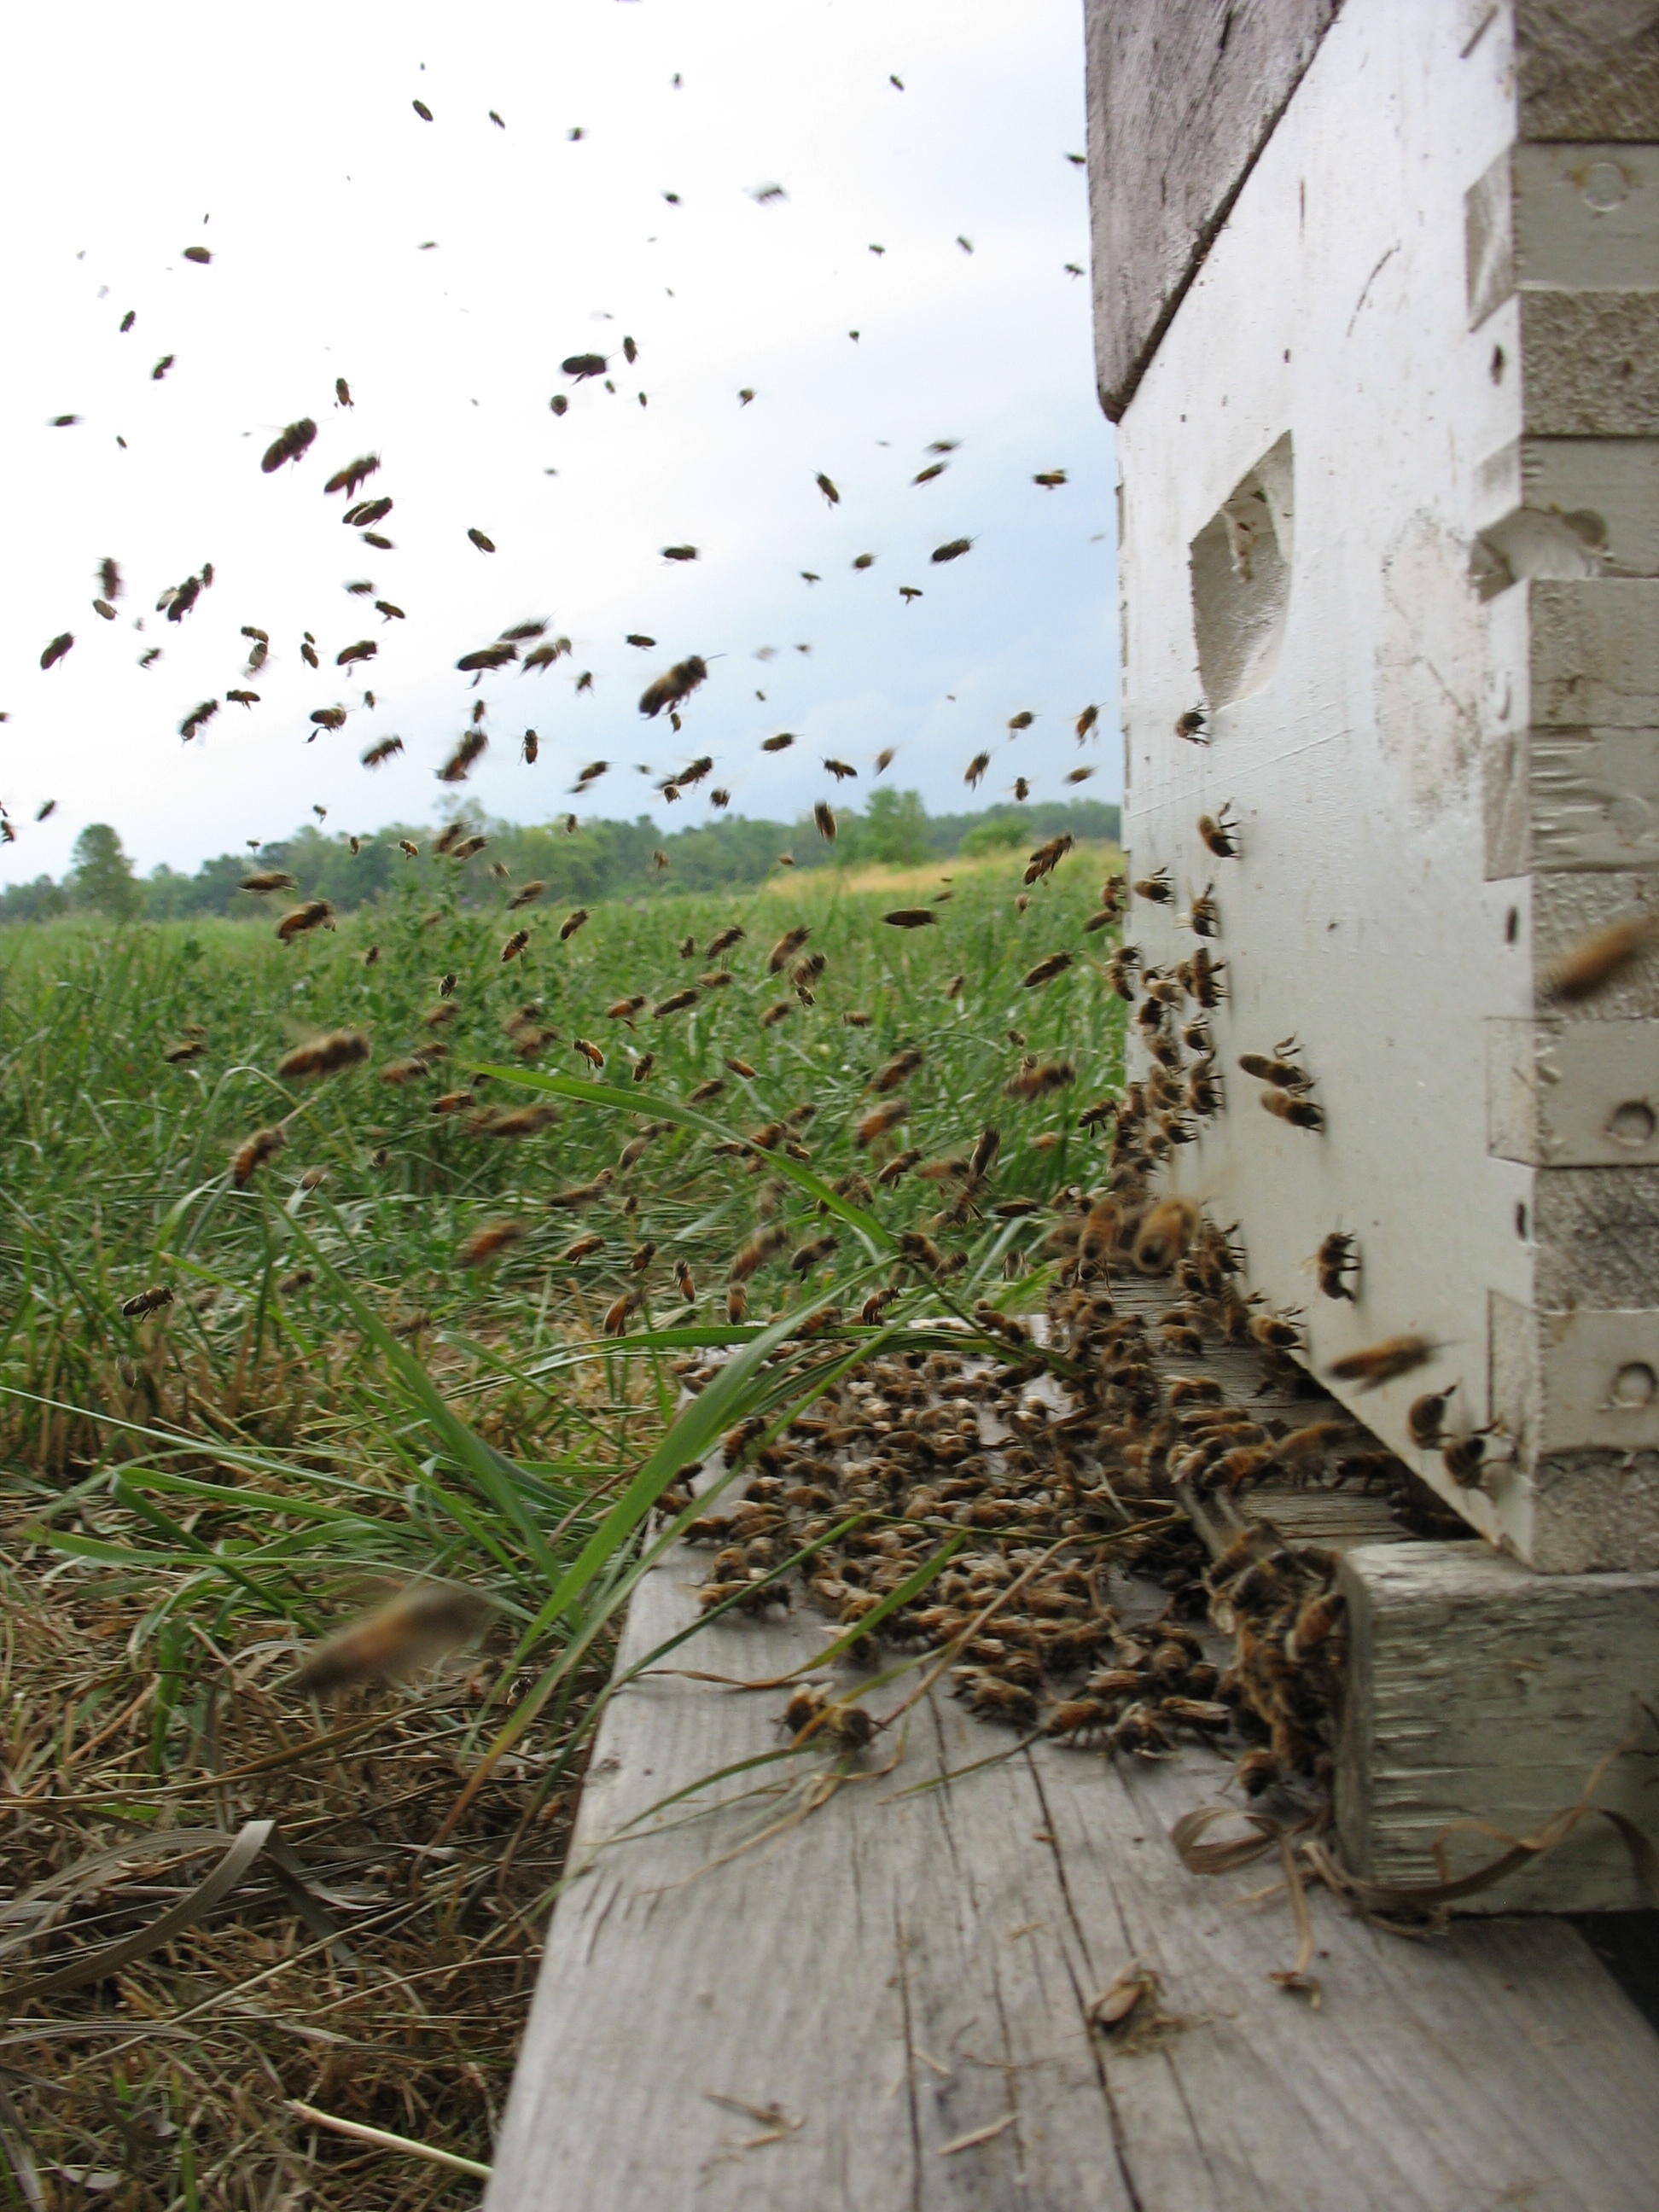 Colony of honey bees